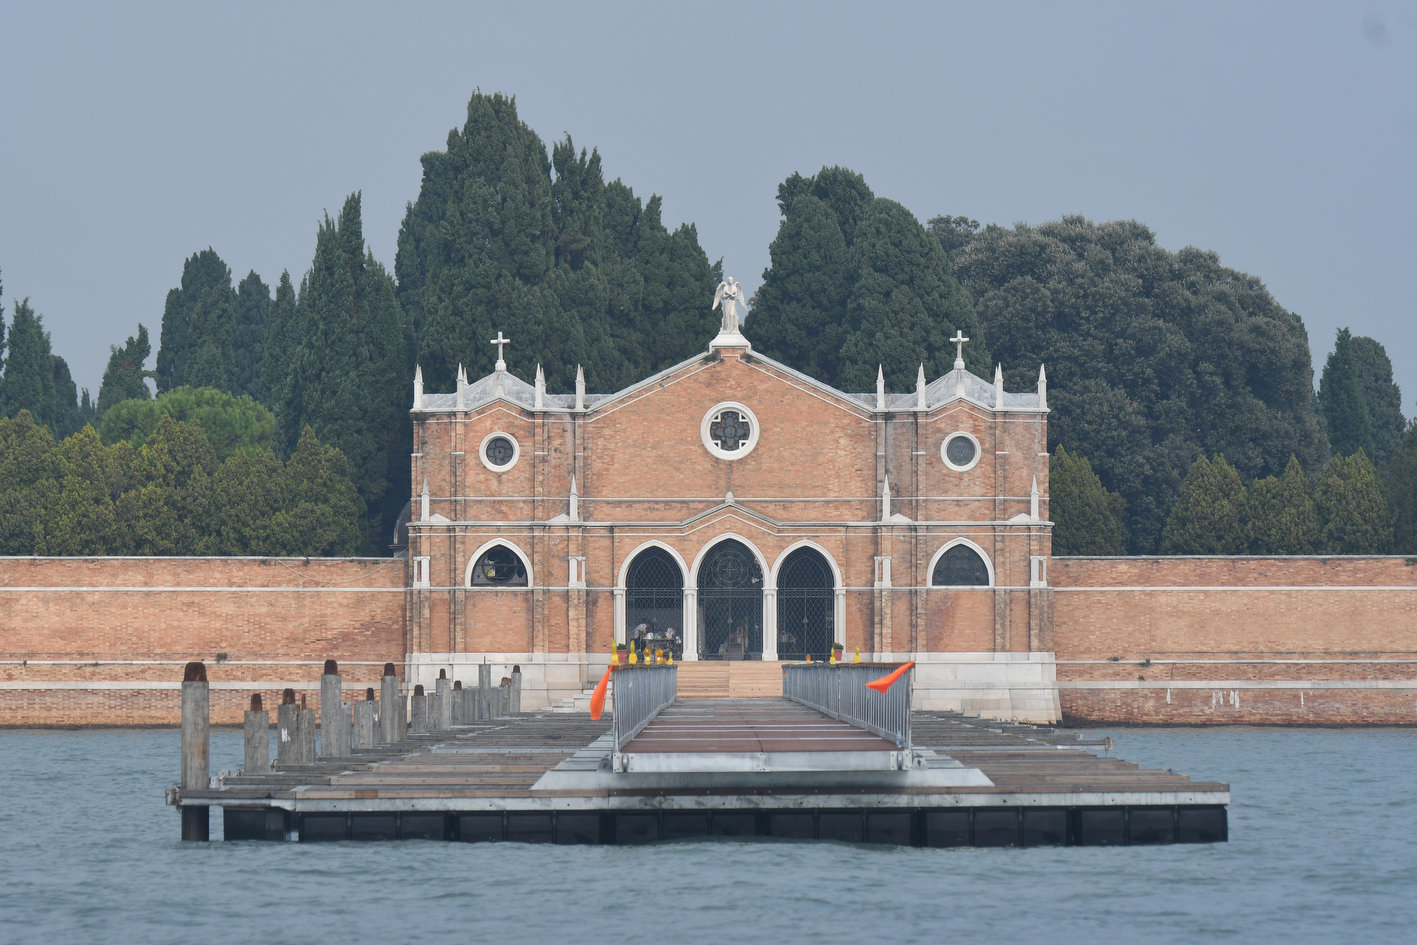 Isola cimiteriale di Venezia